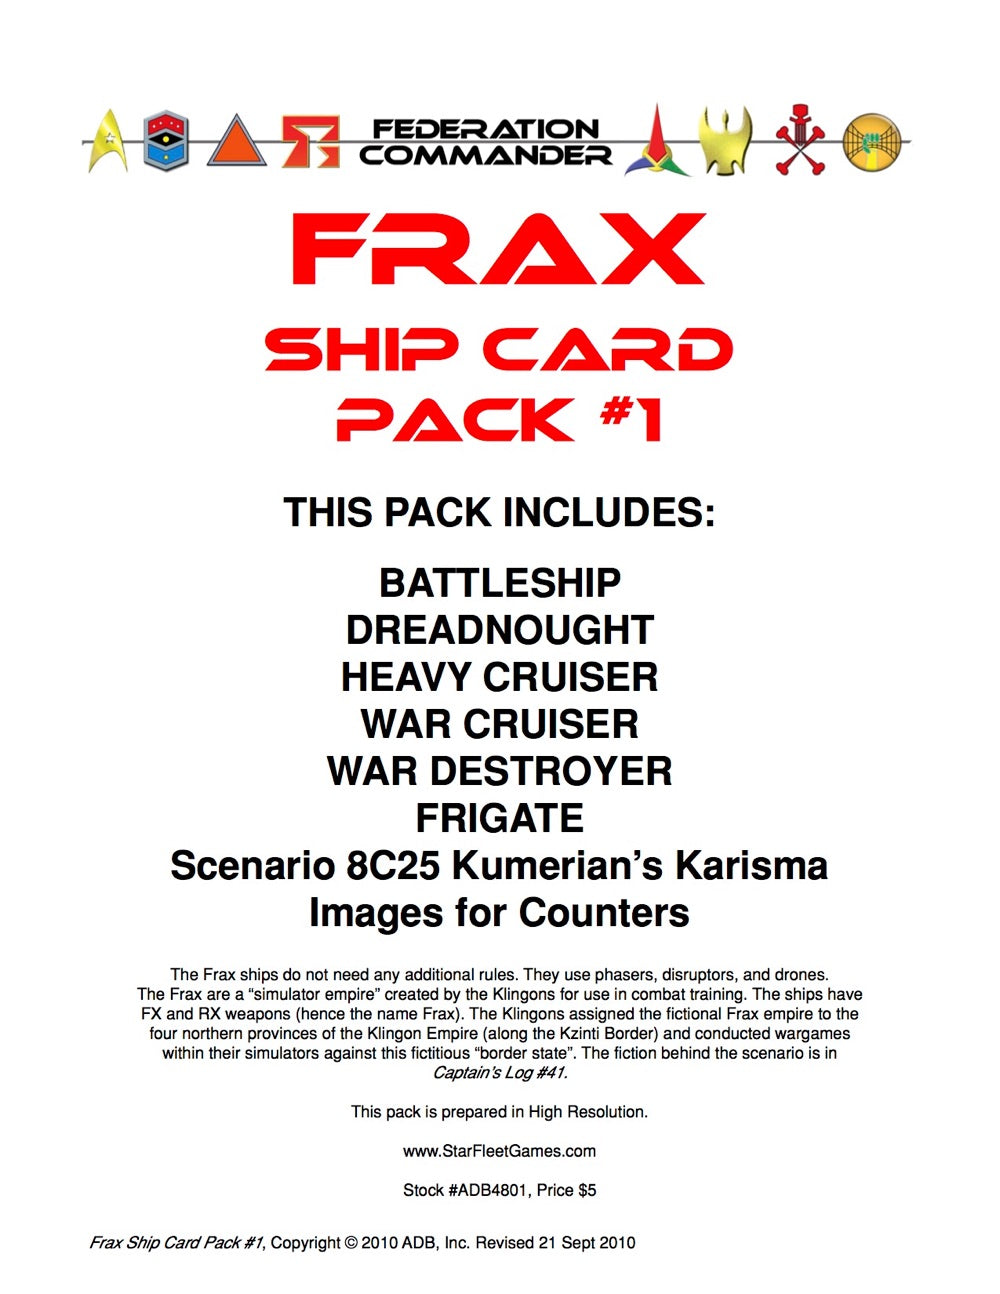 Federation Commander: Frax Ship Card Pack #1